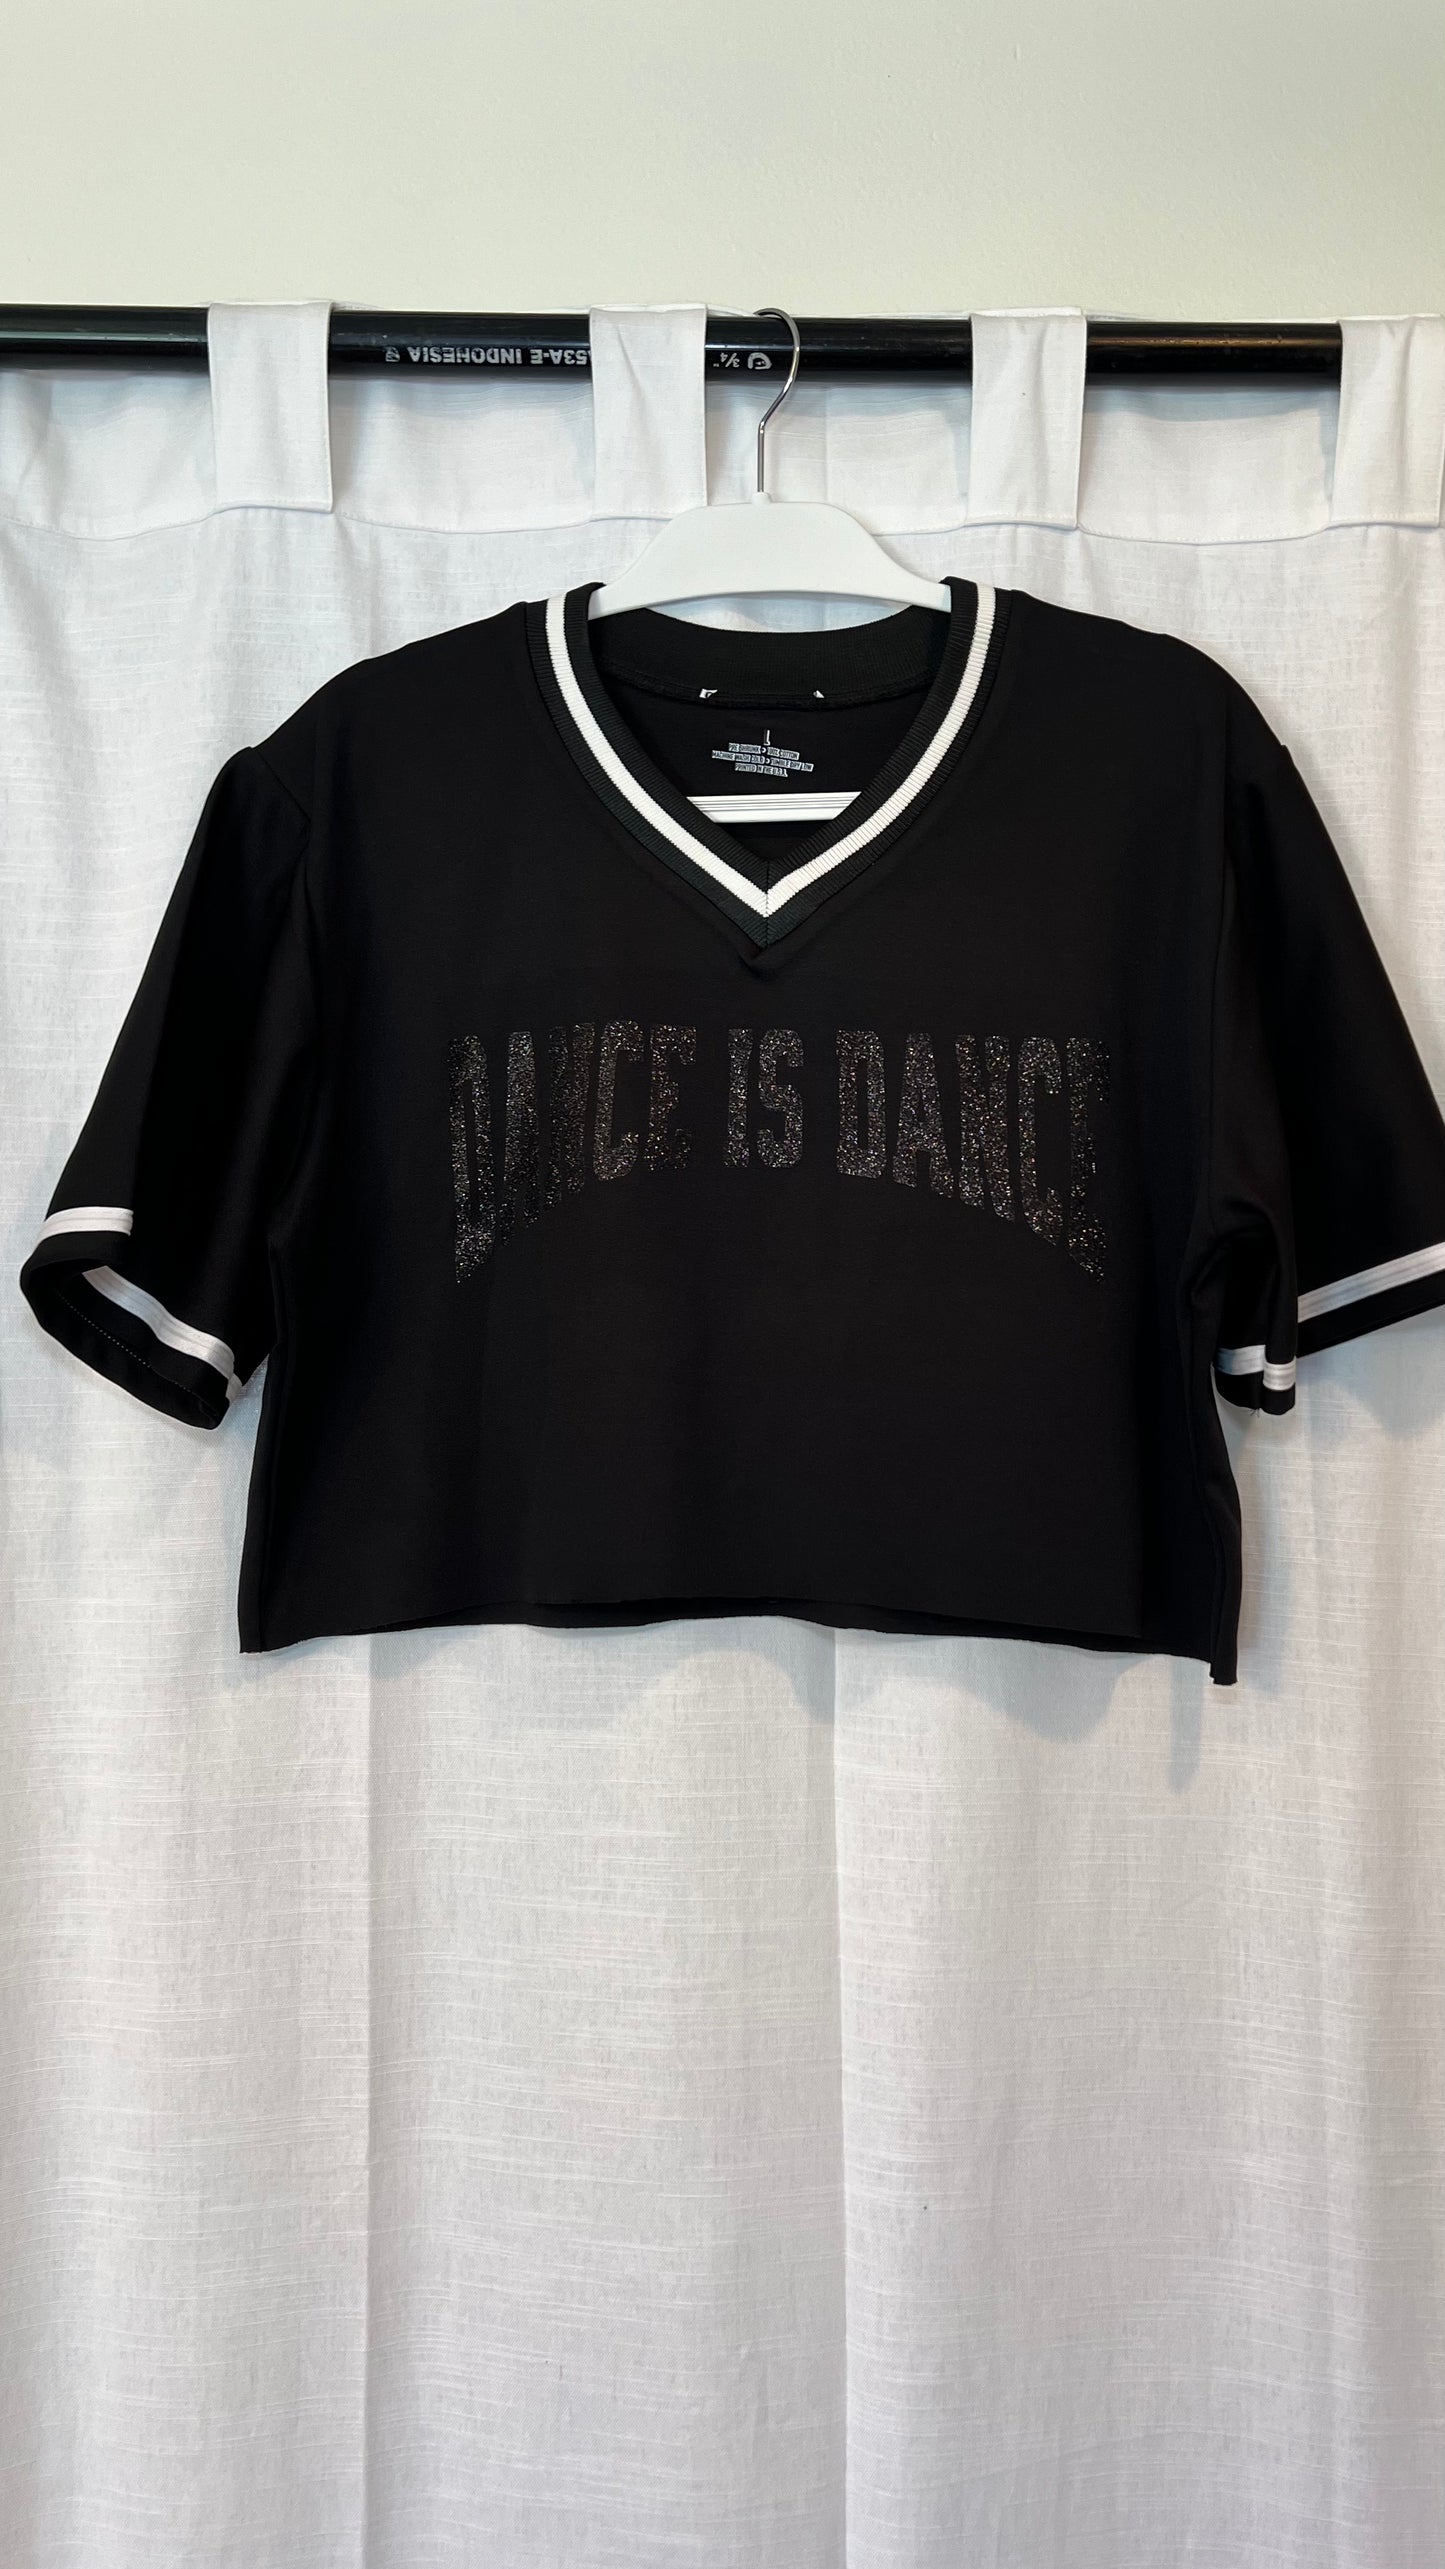 Chelsie's Dance Is Dance Cropped Jersey- black on black sparkle letters